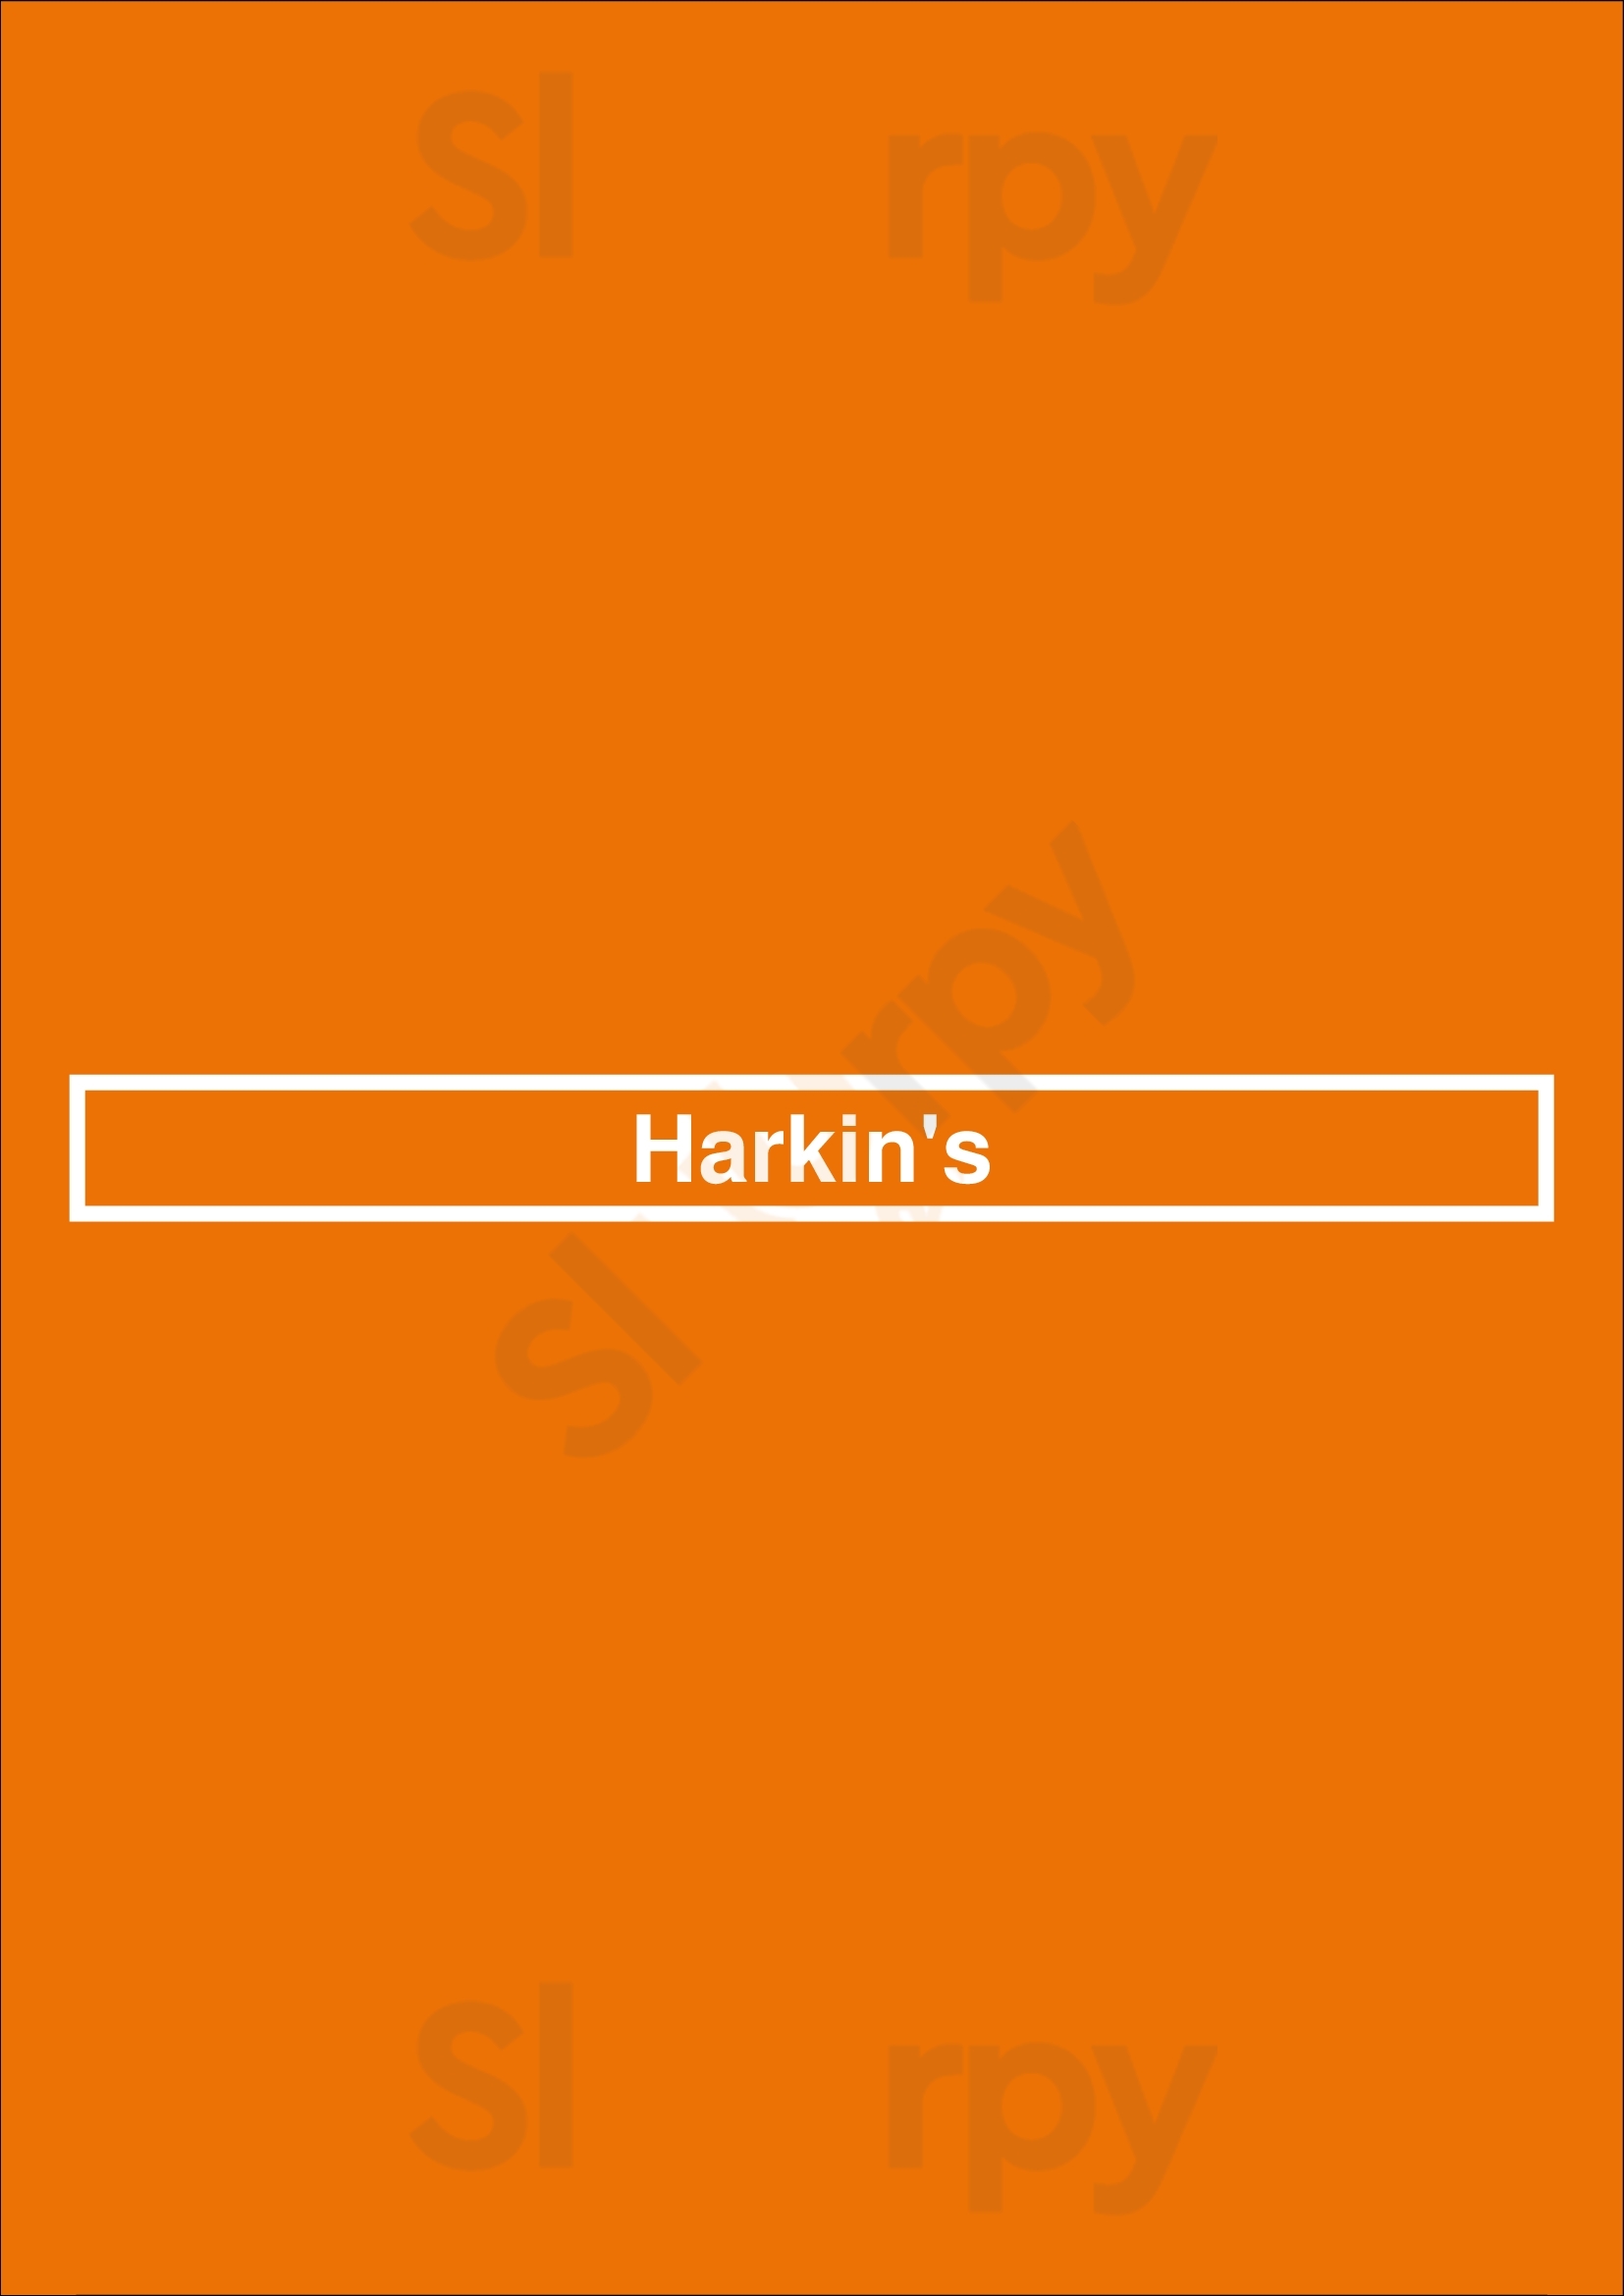 Harkin's Dublin Menu - 1